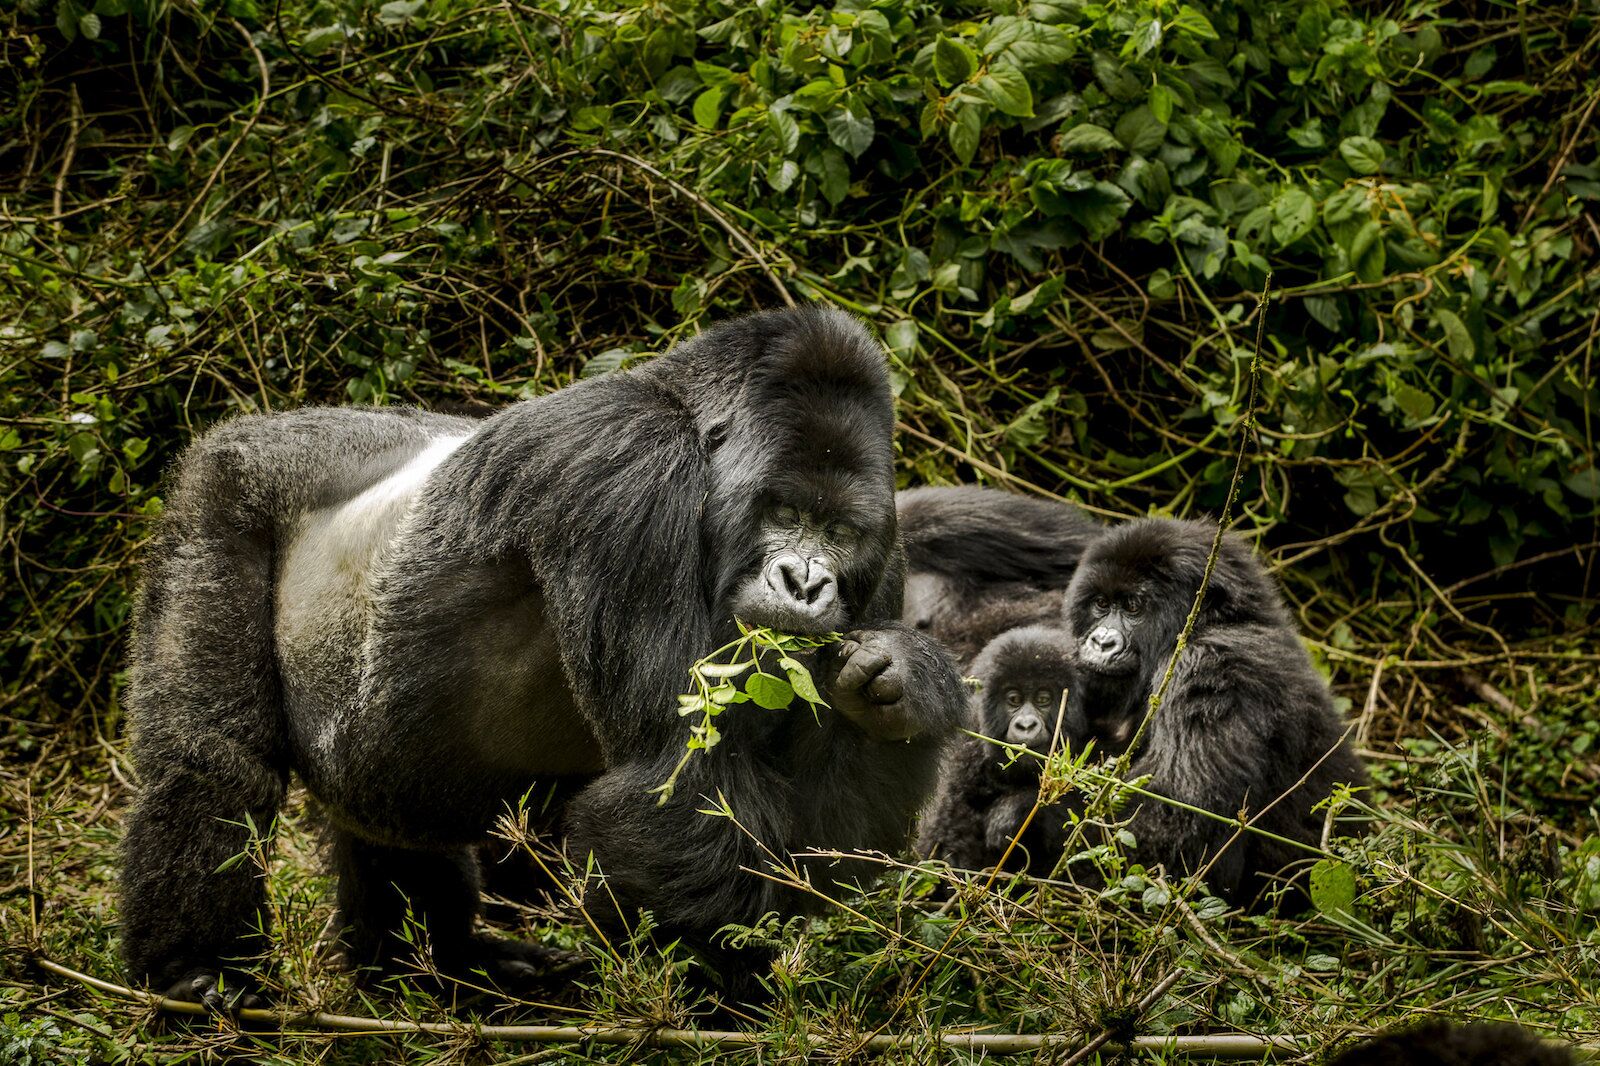 wildlife tourism - gorilla family in rwanda 